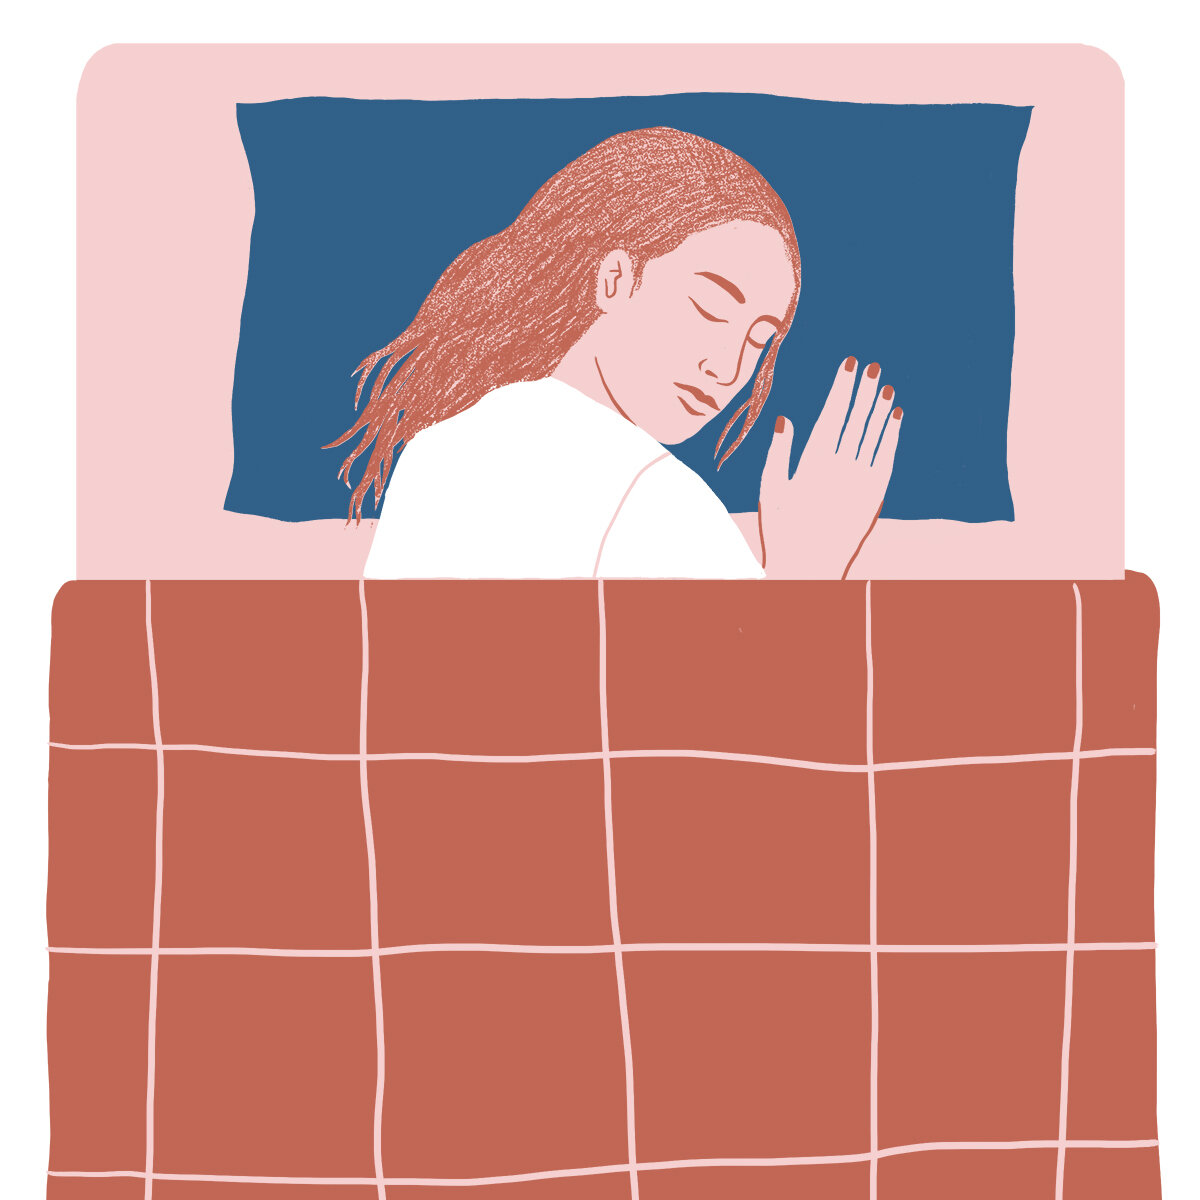 Insomnia: A Sleeping Disorder